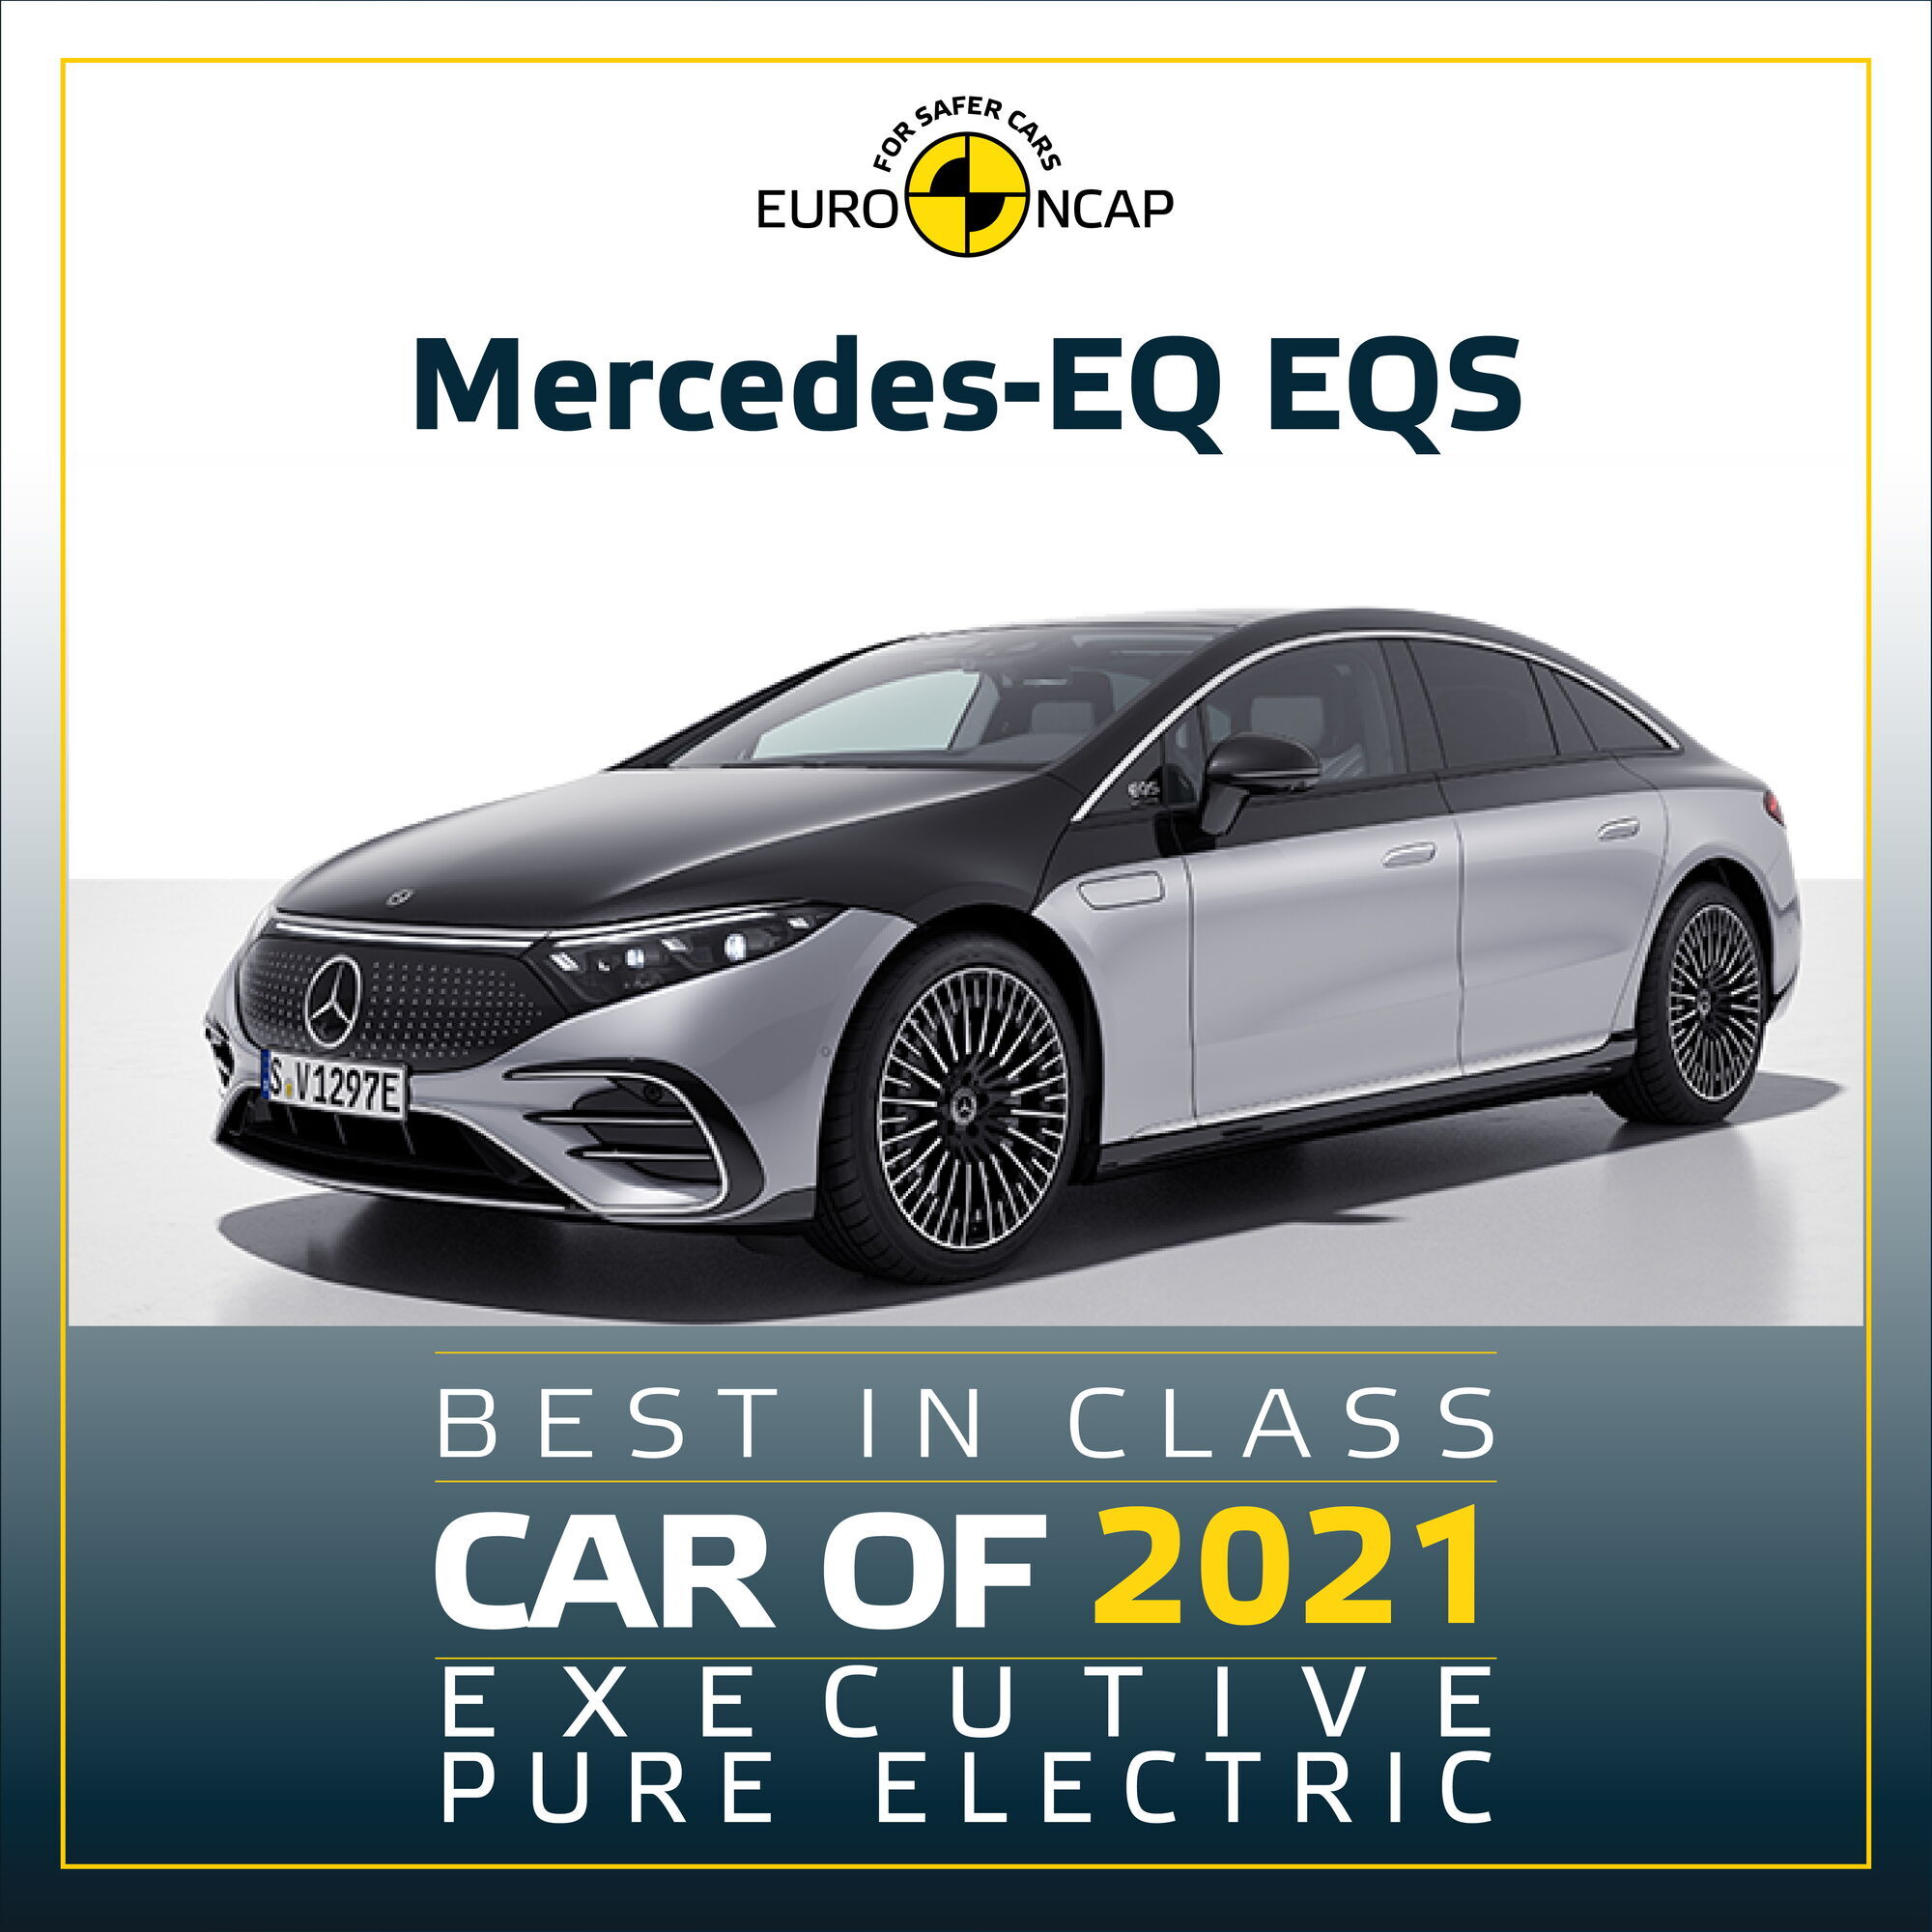 Електричний Mercedes-Benz EQS отримав одразу дві нагороди